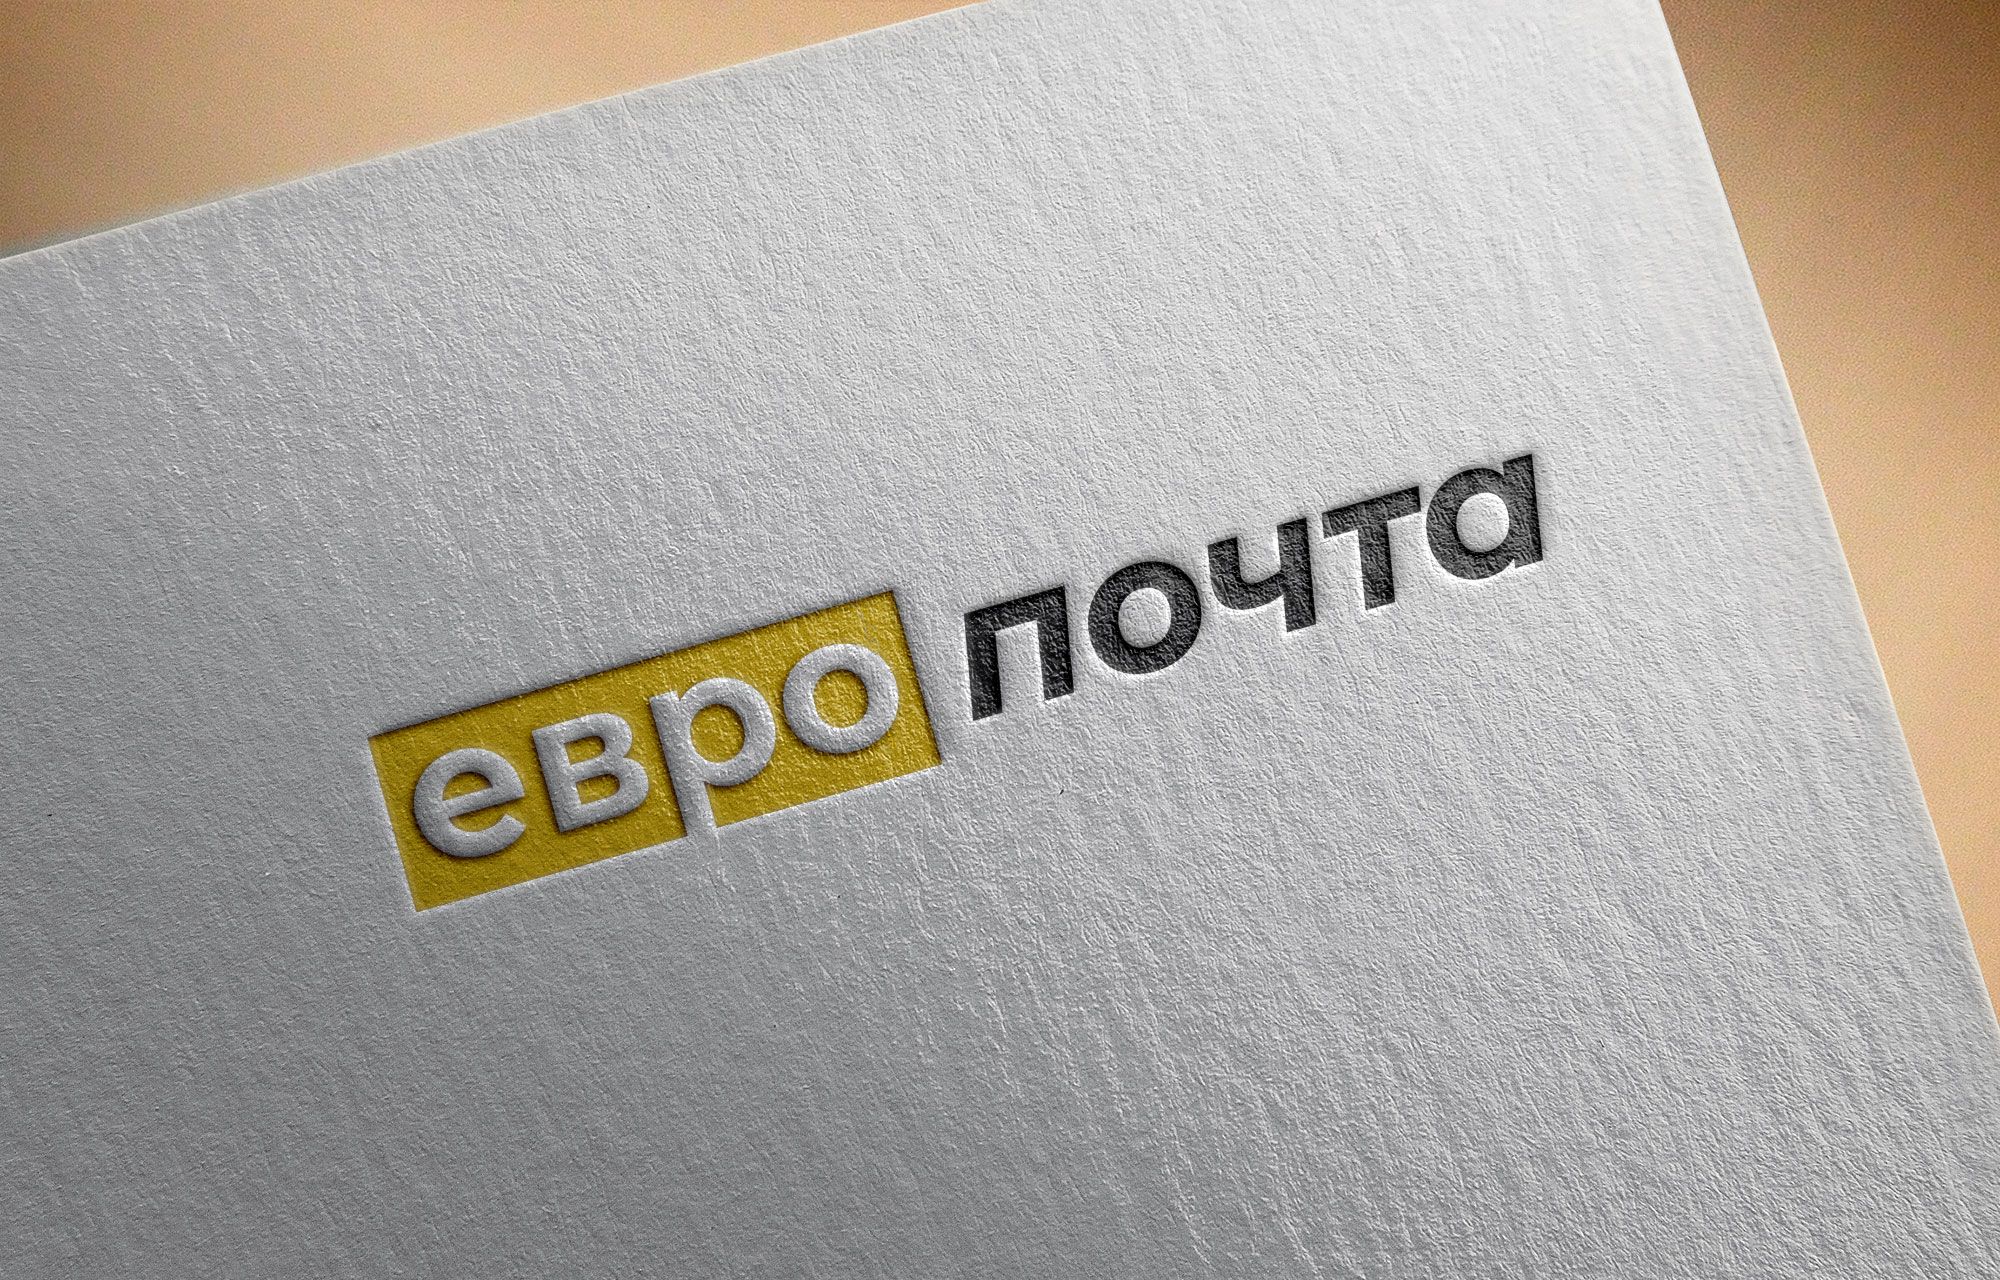 Логотип для ЕвроПочта - дизайнер vlad_yush